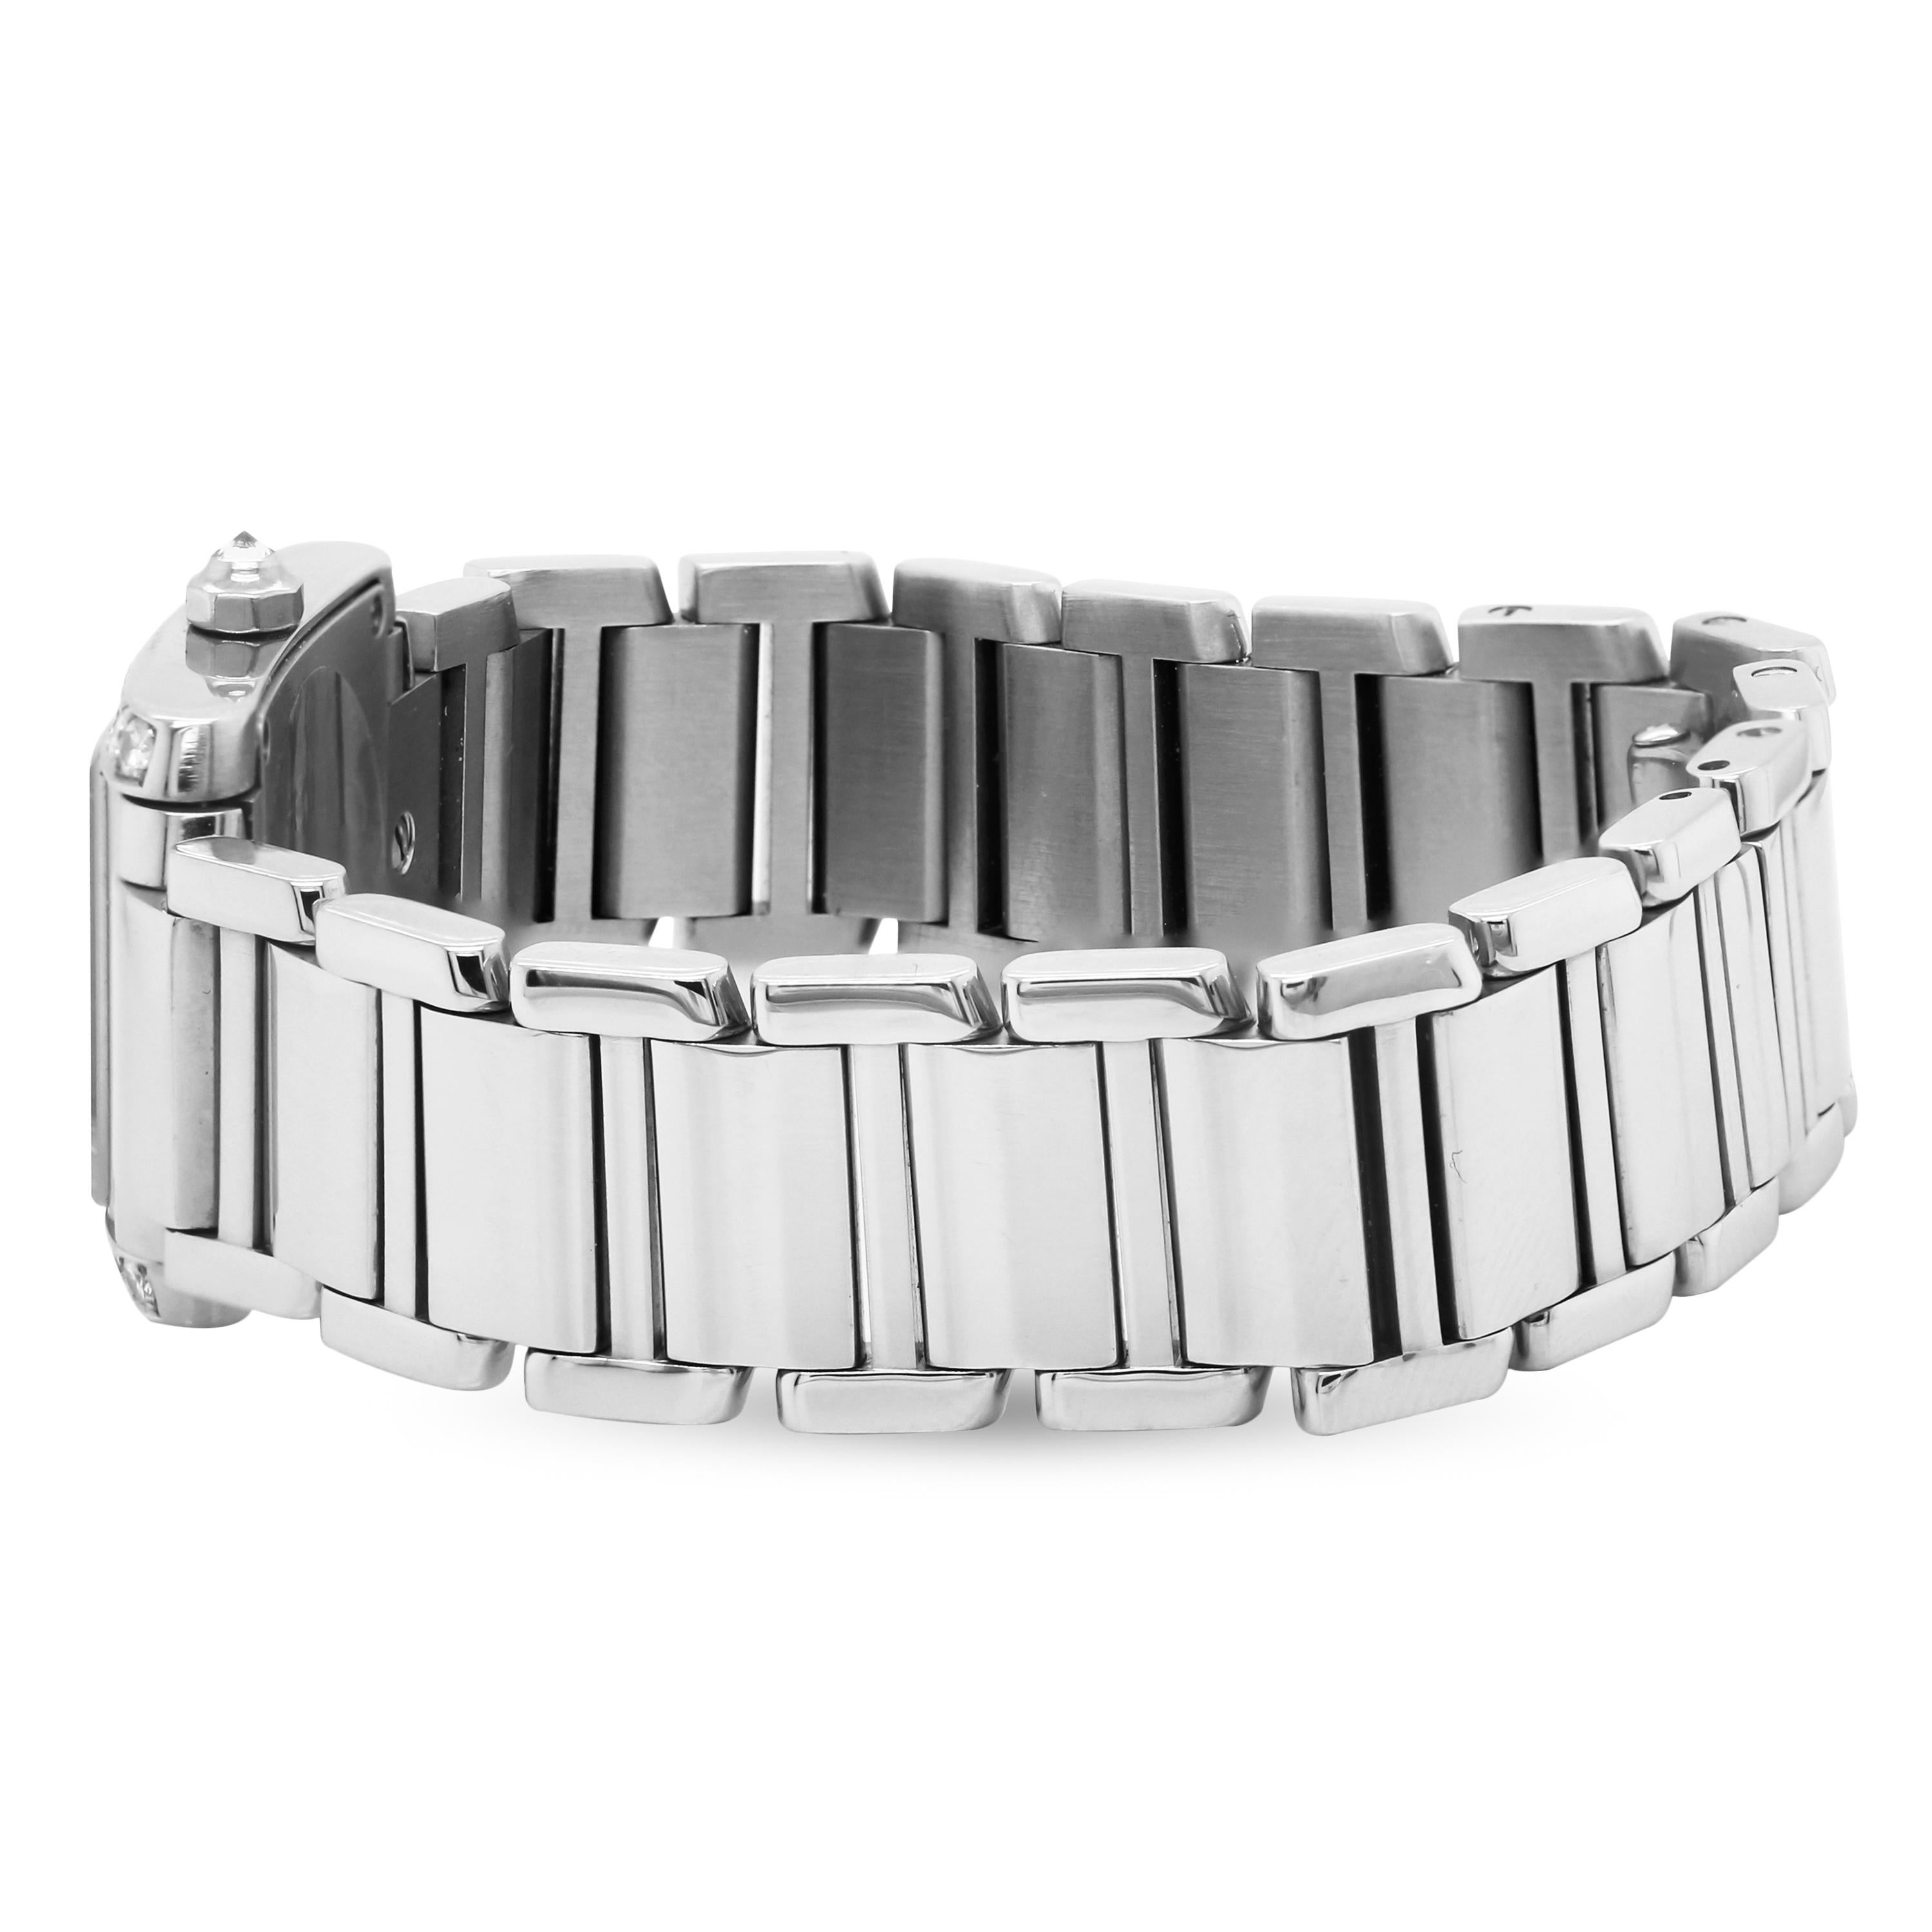 Round Cut Cartier Tank Francaise Stainless Steel White Diamond Bezel Ladies Watch 2384